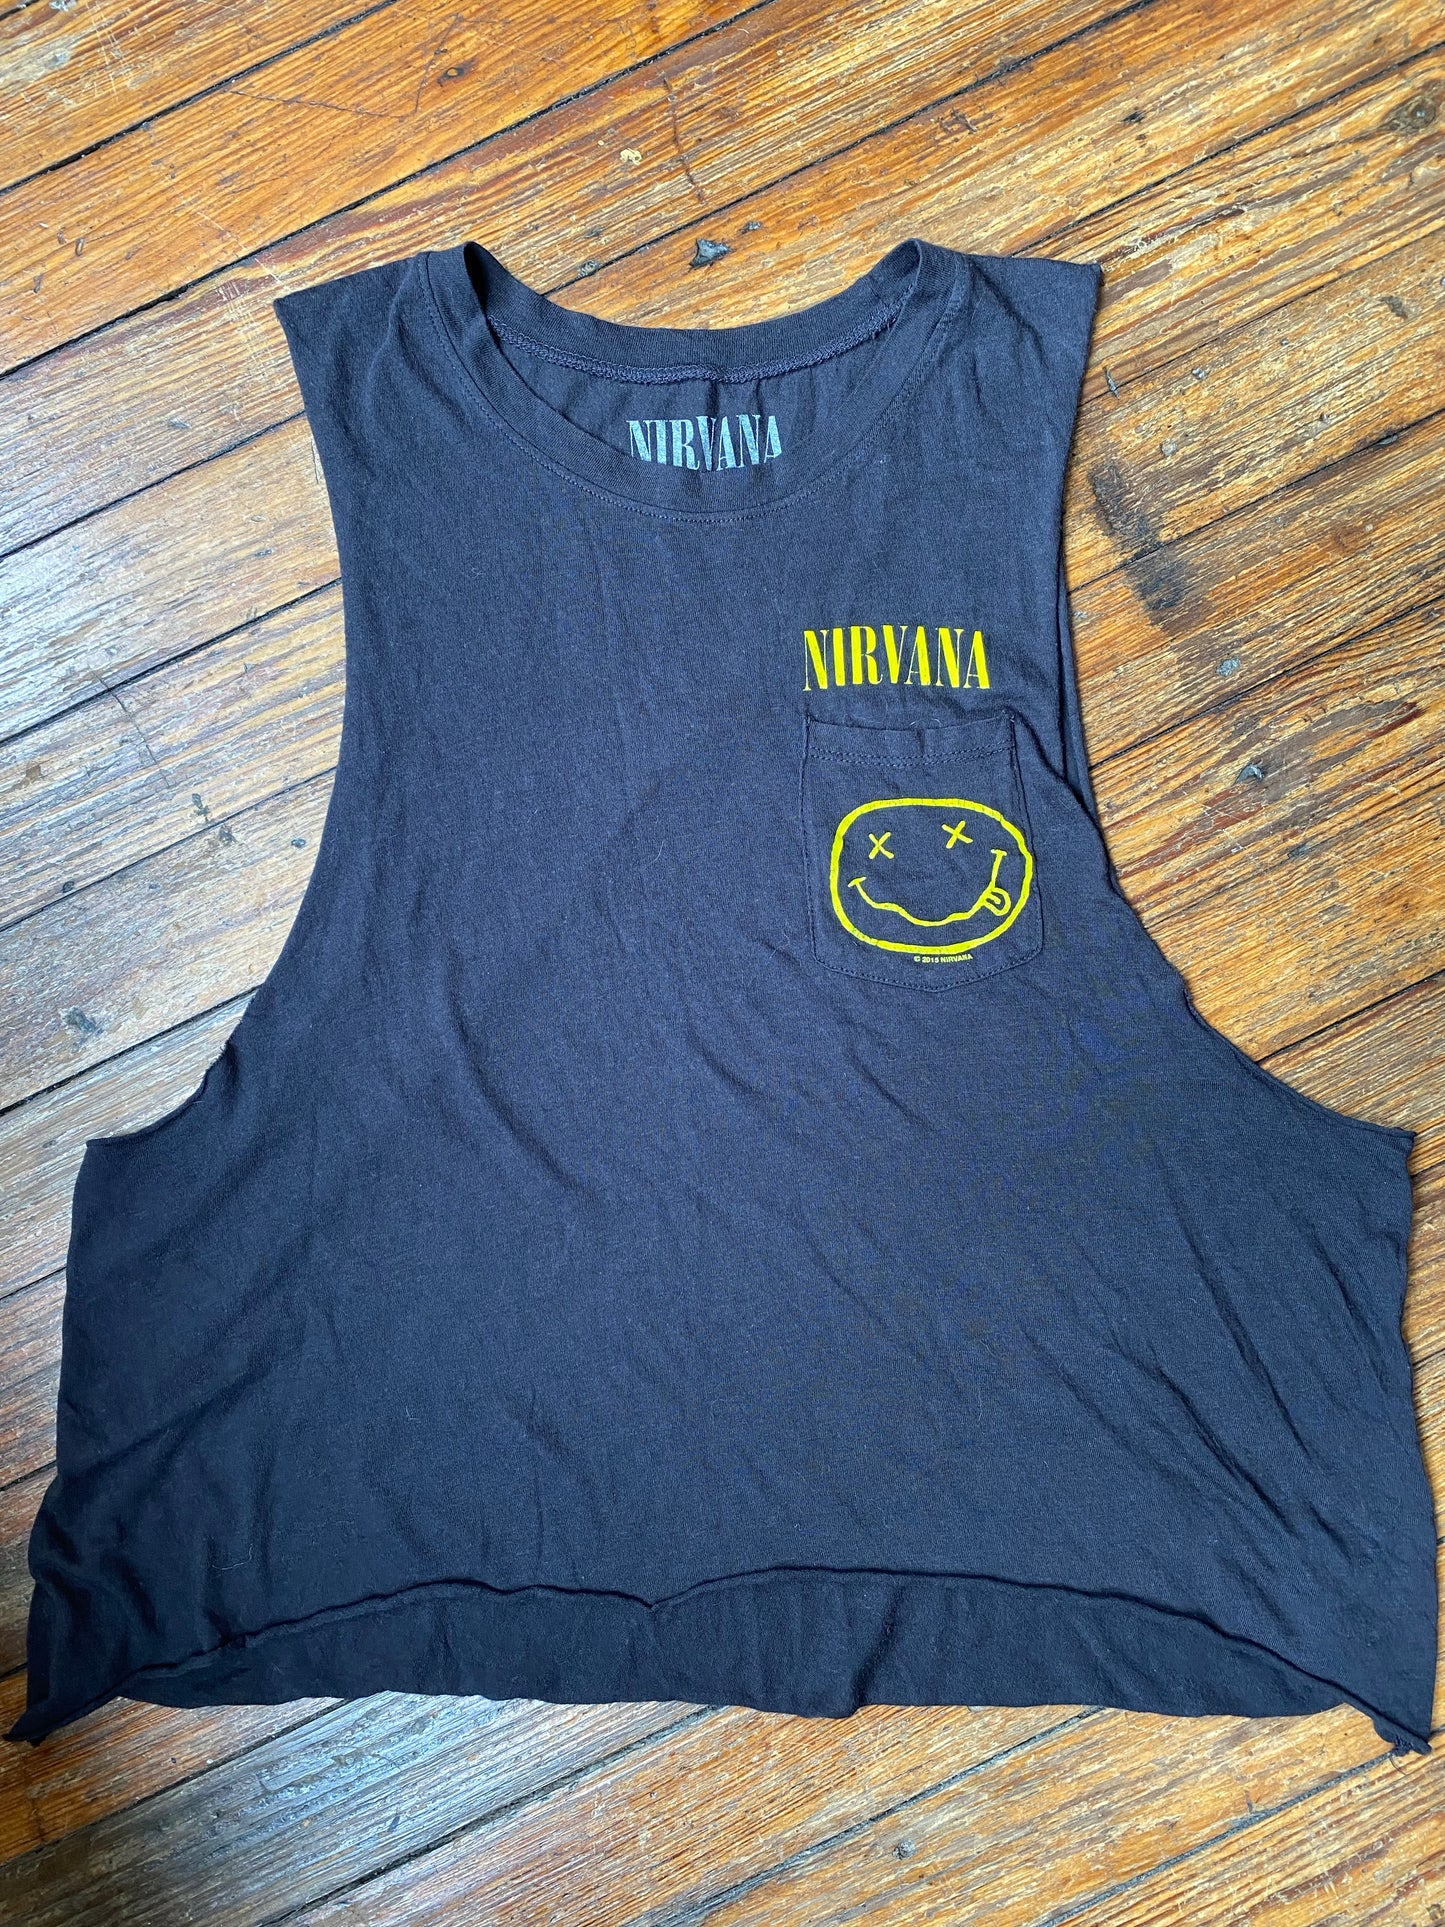 Official 2015 Nirvana Smiley Face Sleeveless T-Shirt